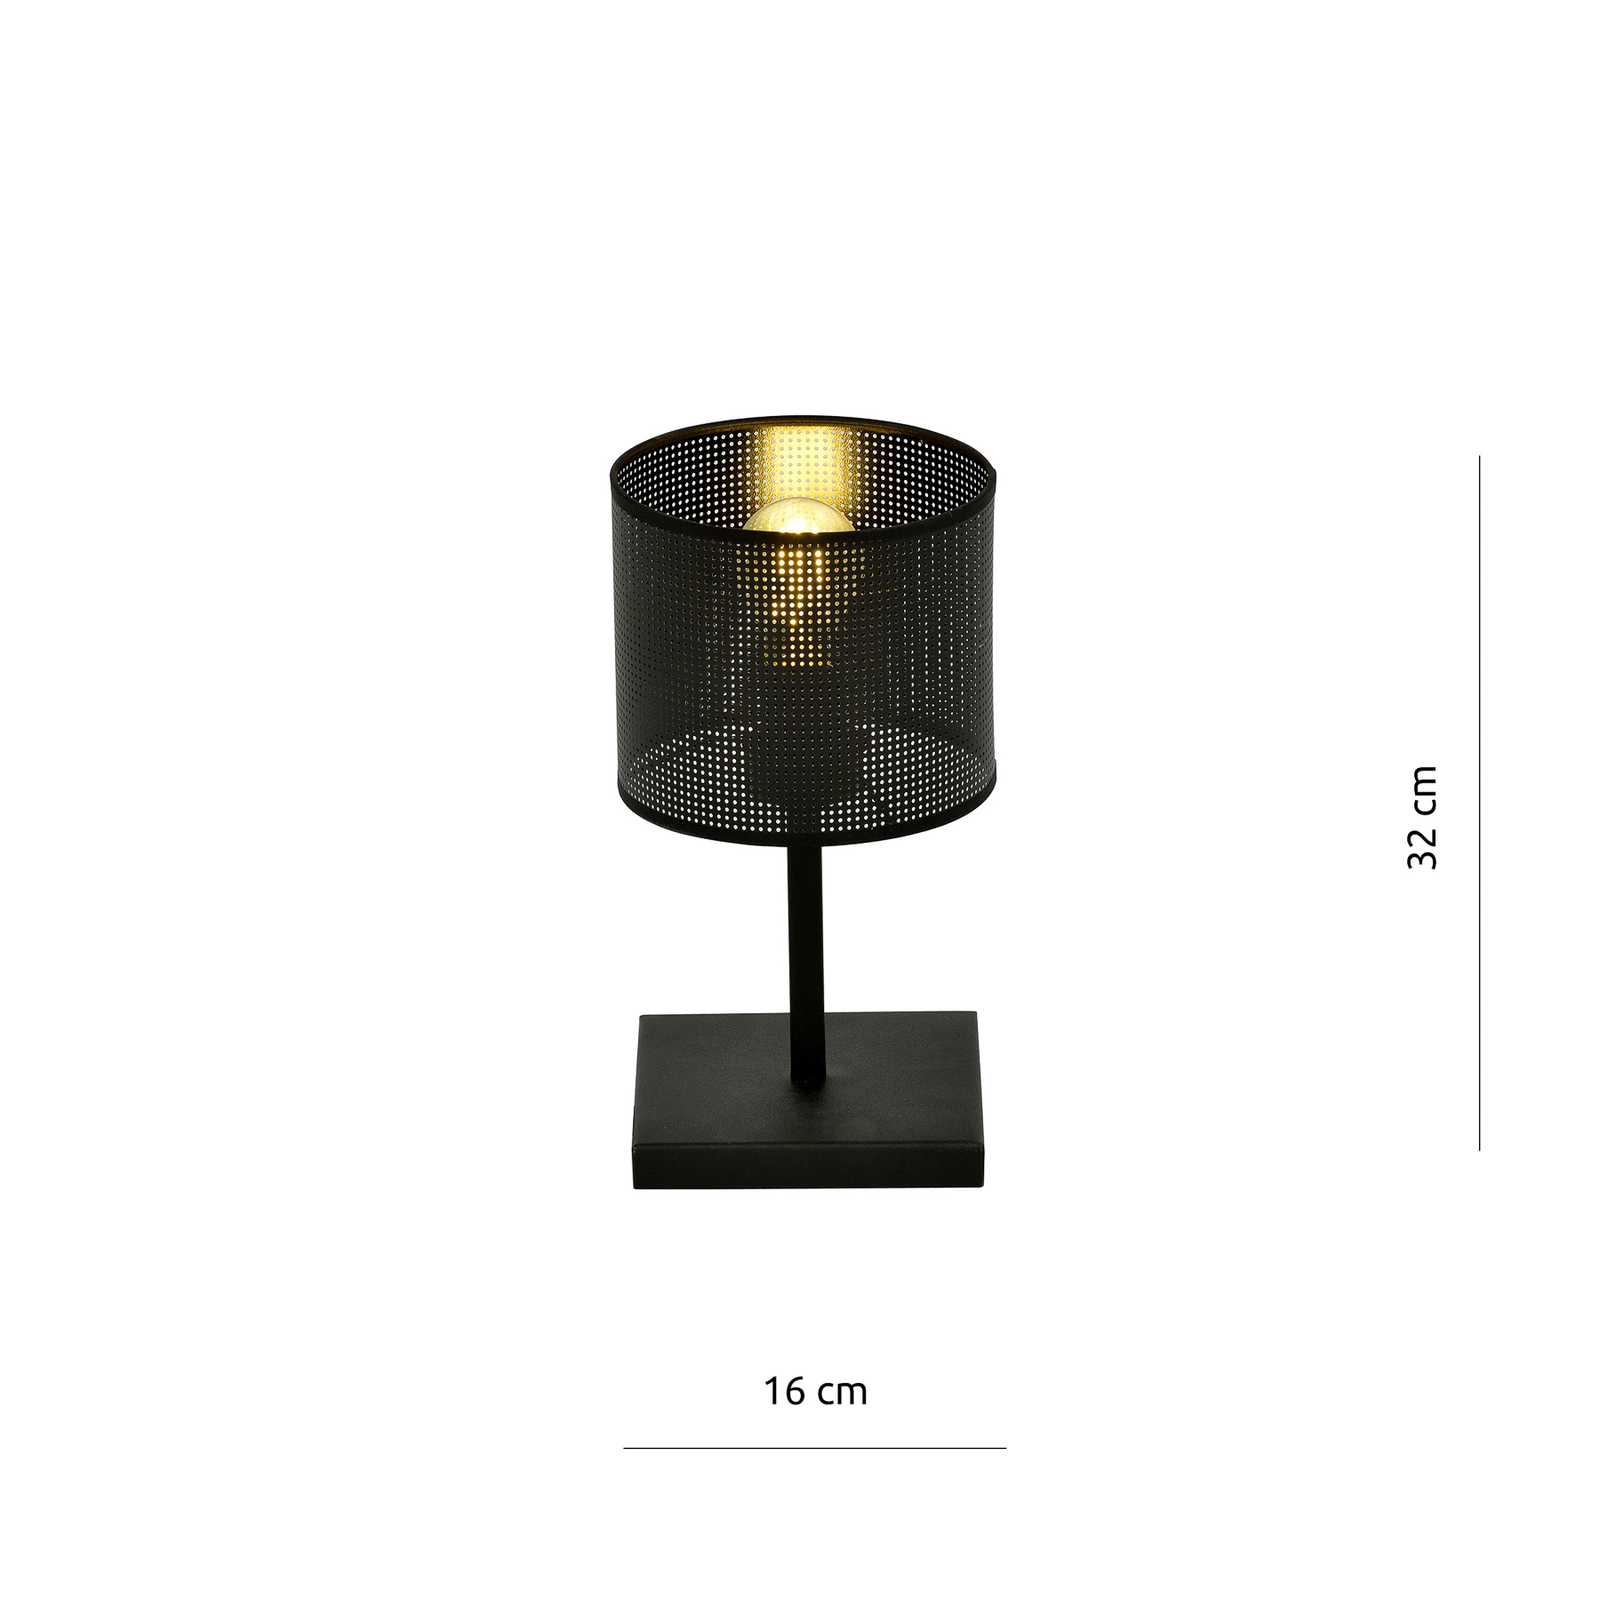 Jordan table lamp, black, one-bulb